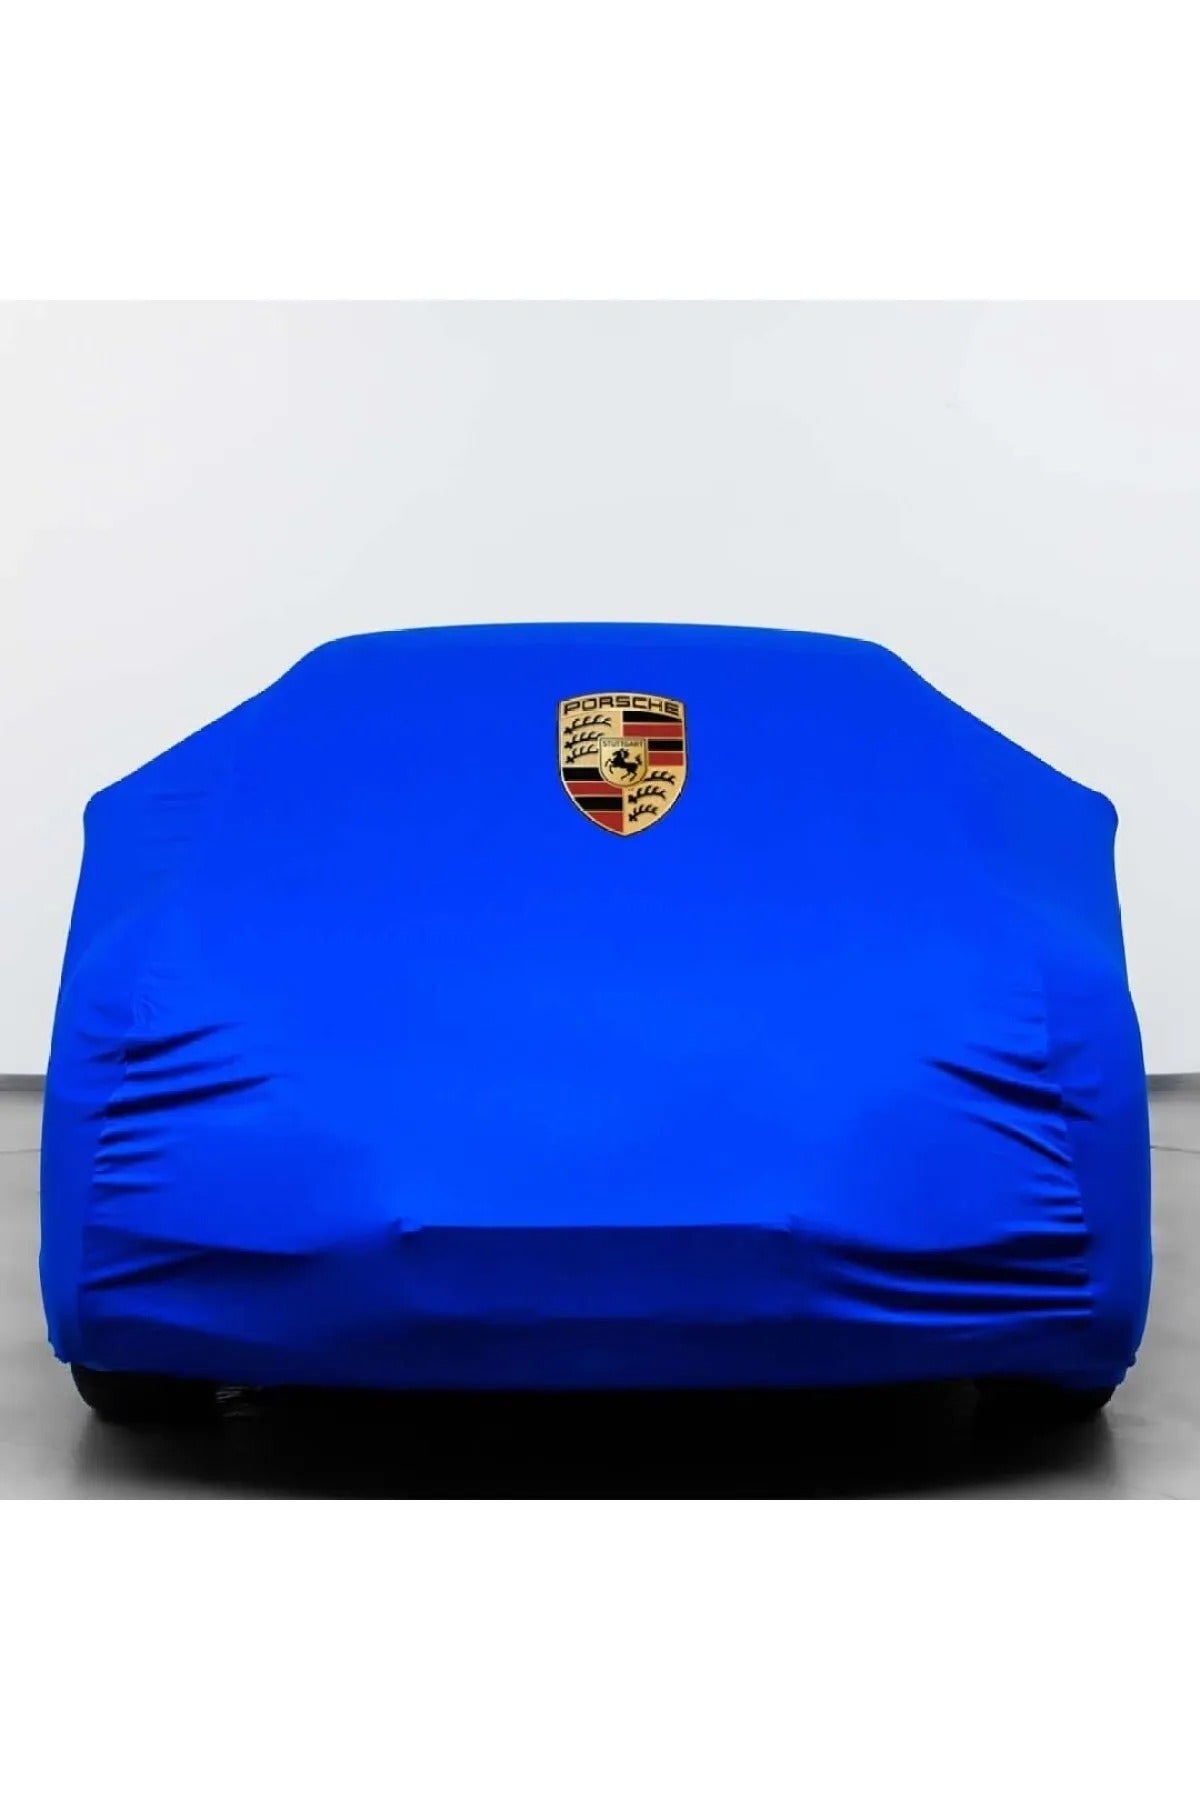 Porsche 911 Car Cover, Indoor Car Cover, Dustproof, Color Option